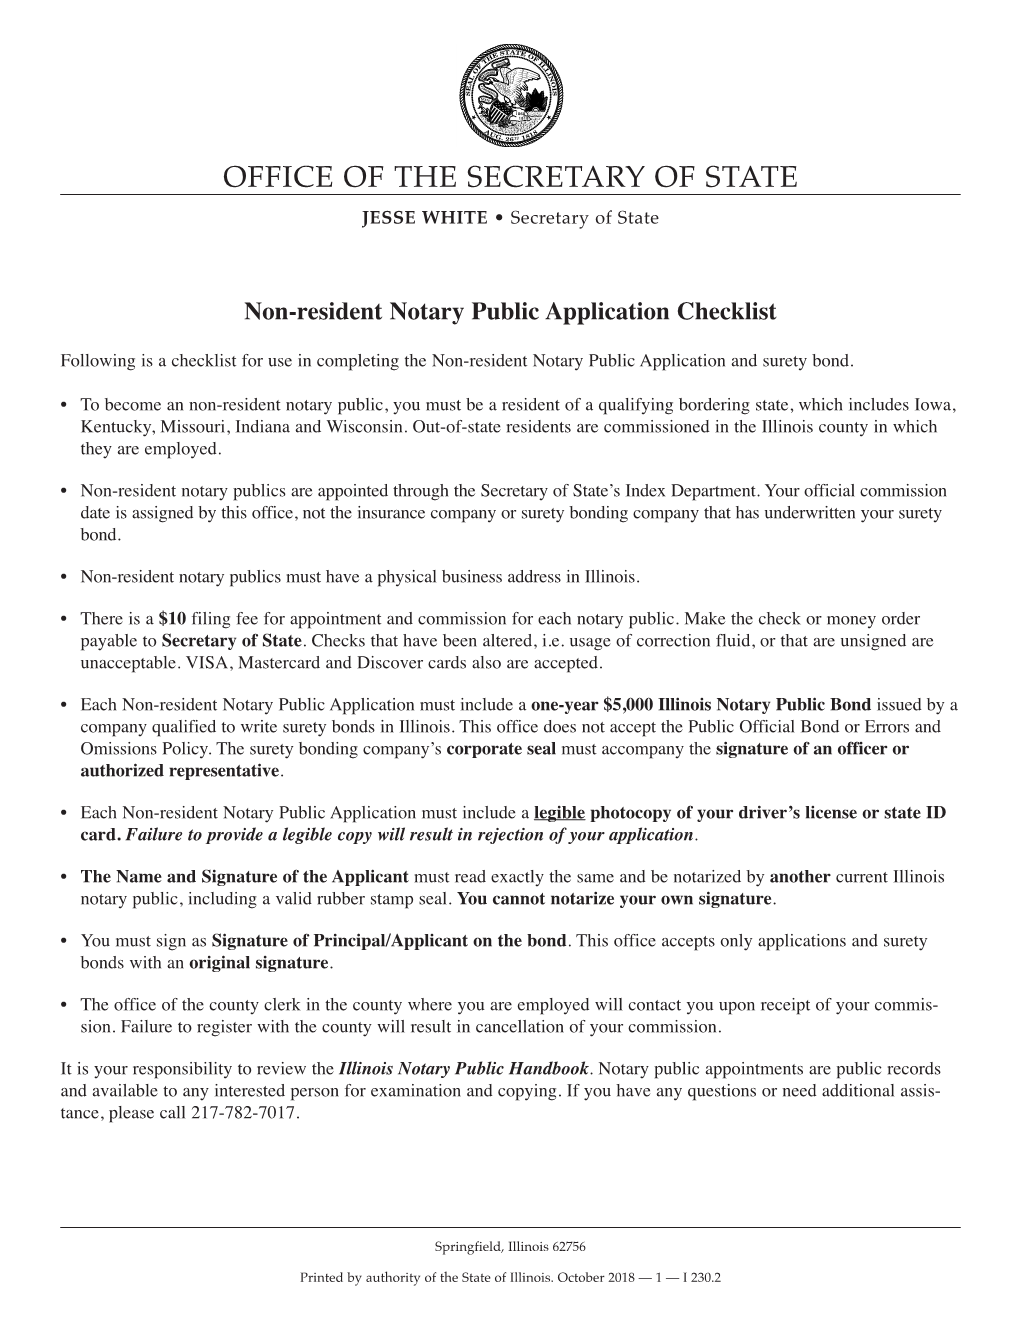 Illinois Non-Resident Notary Public Application Checklist